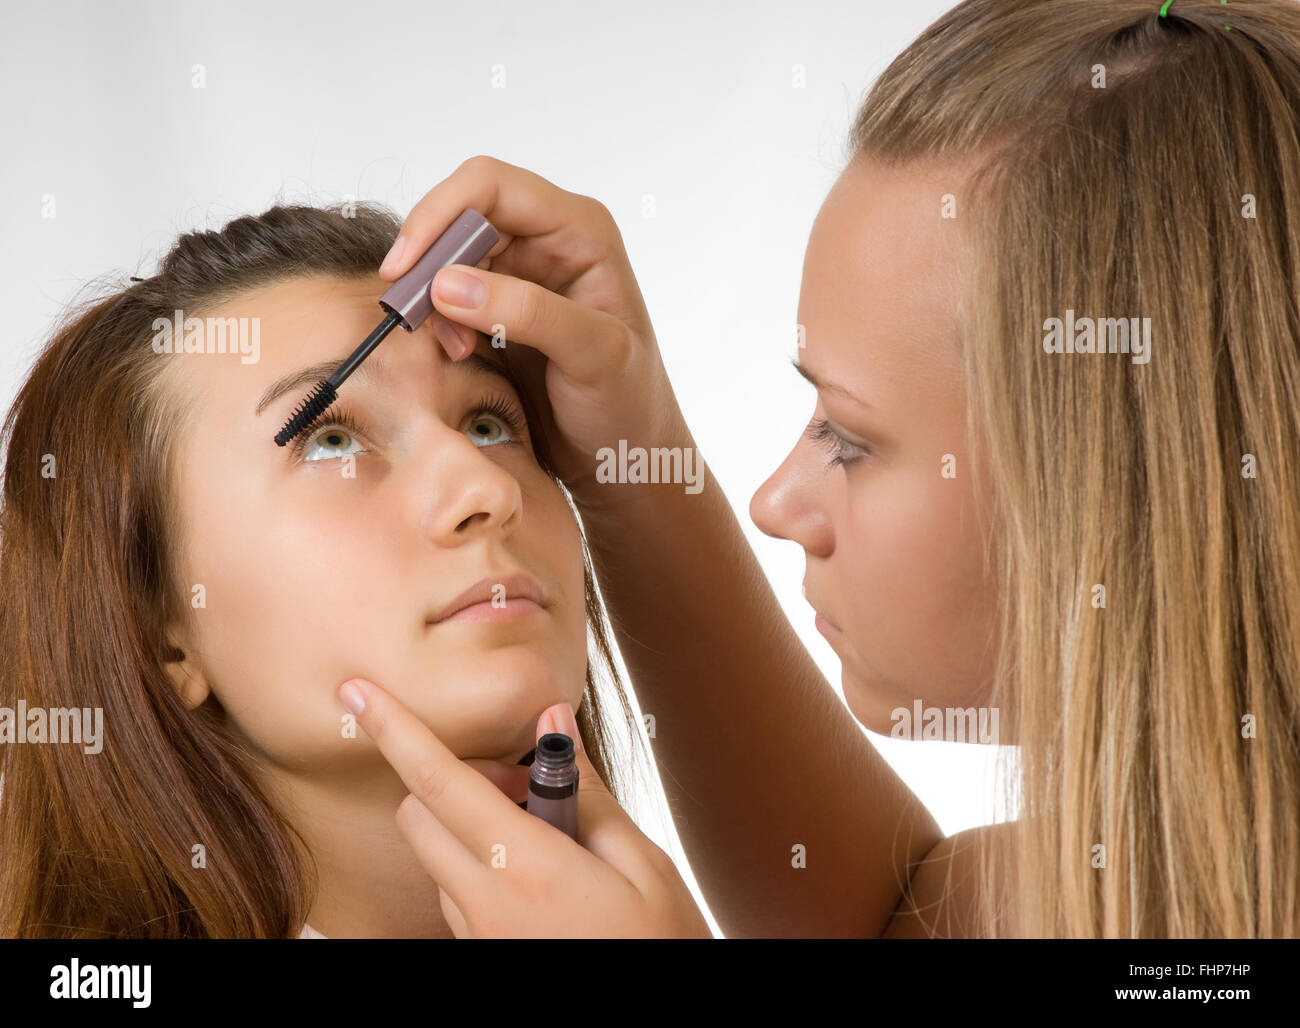 teenage girls dye their eyelashes Stock Photo